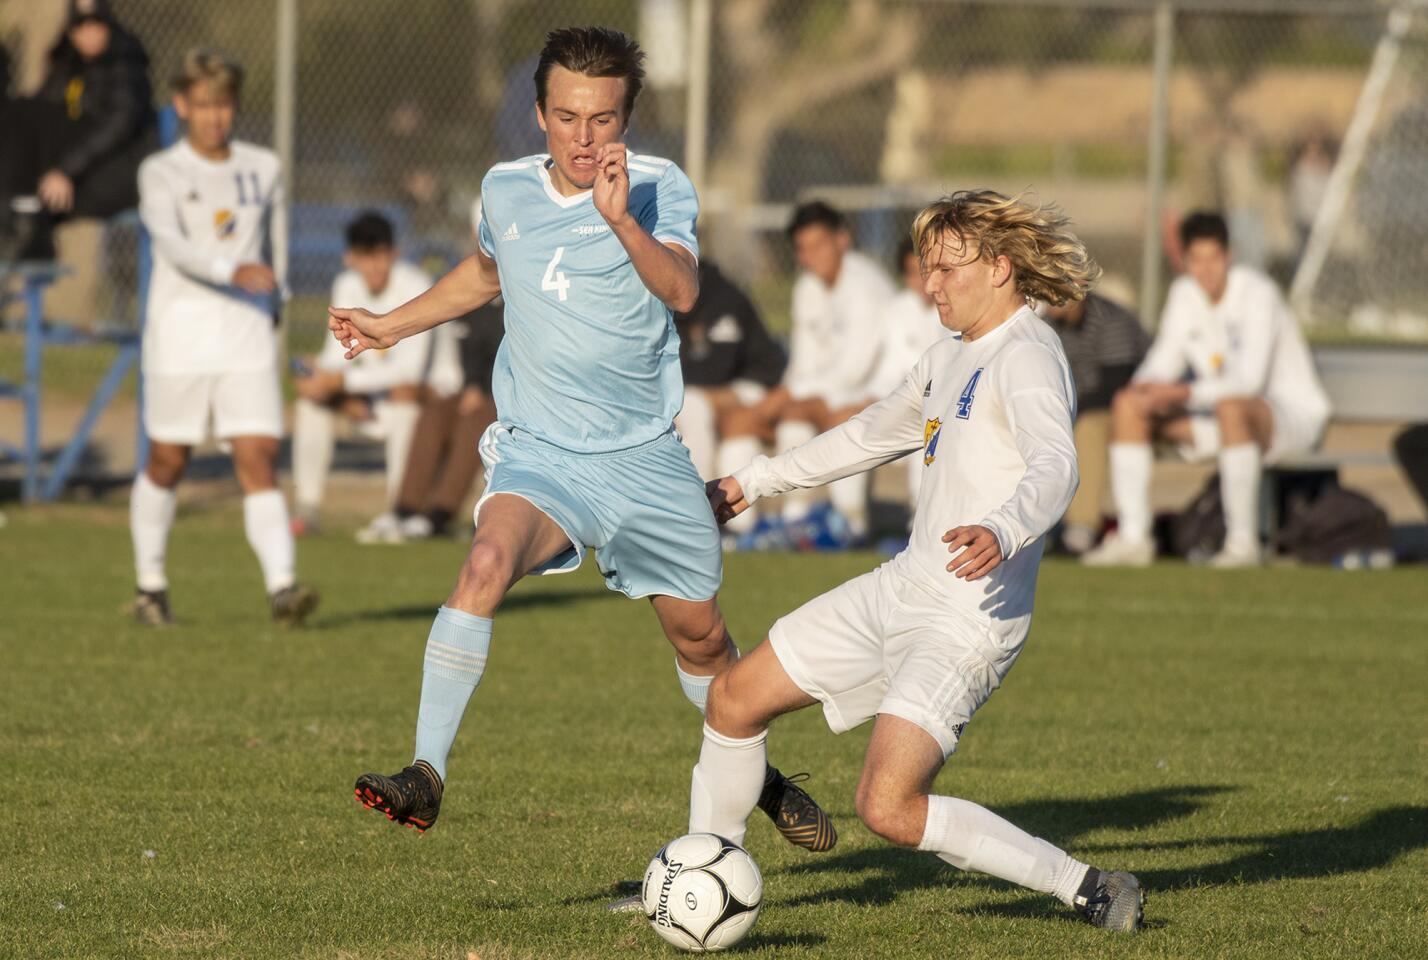 Photo Gallery: Fountain Valley vs. Corona del Mar in boys' soccer